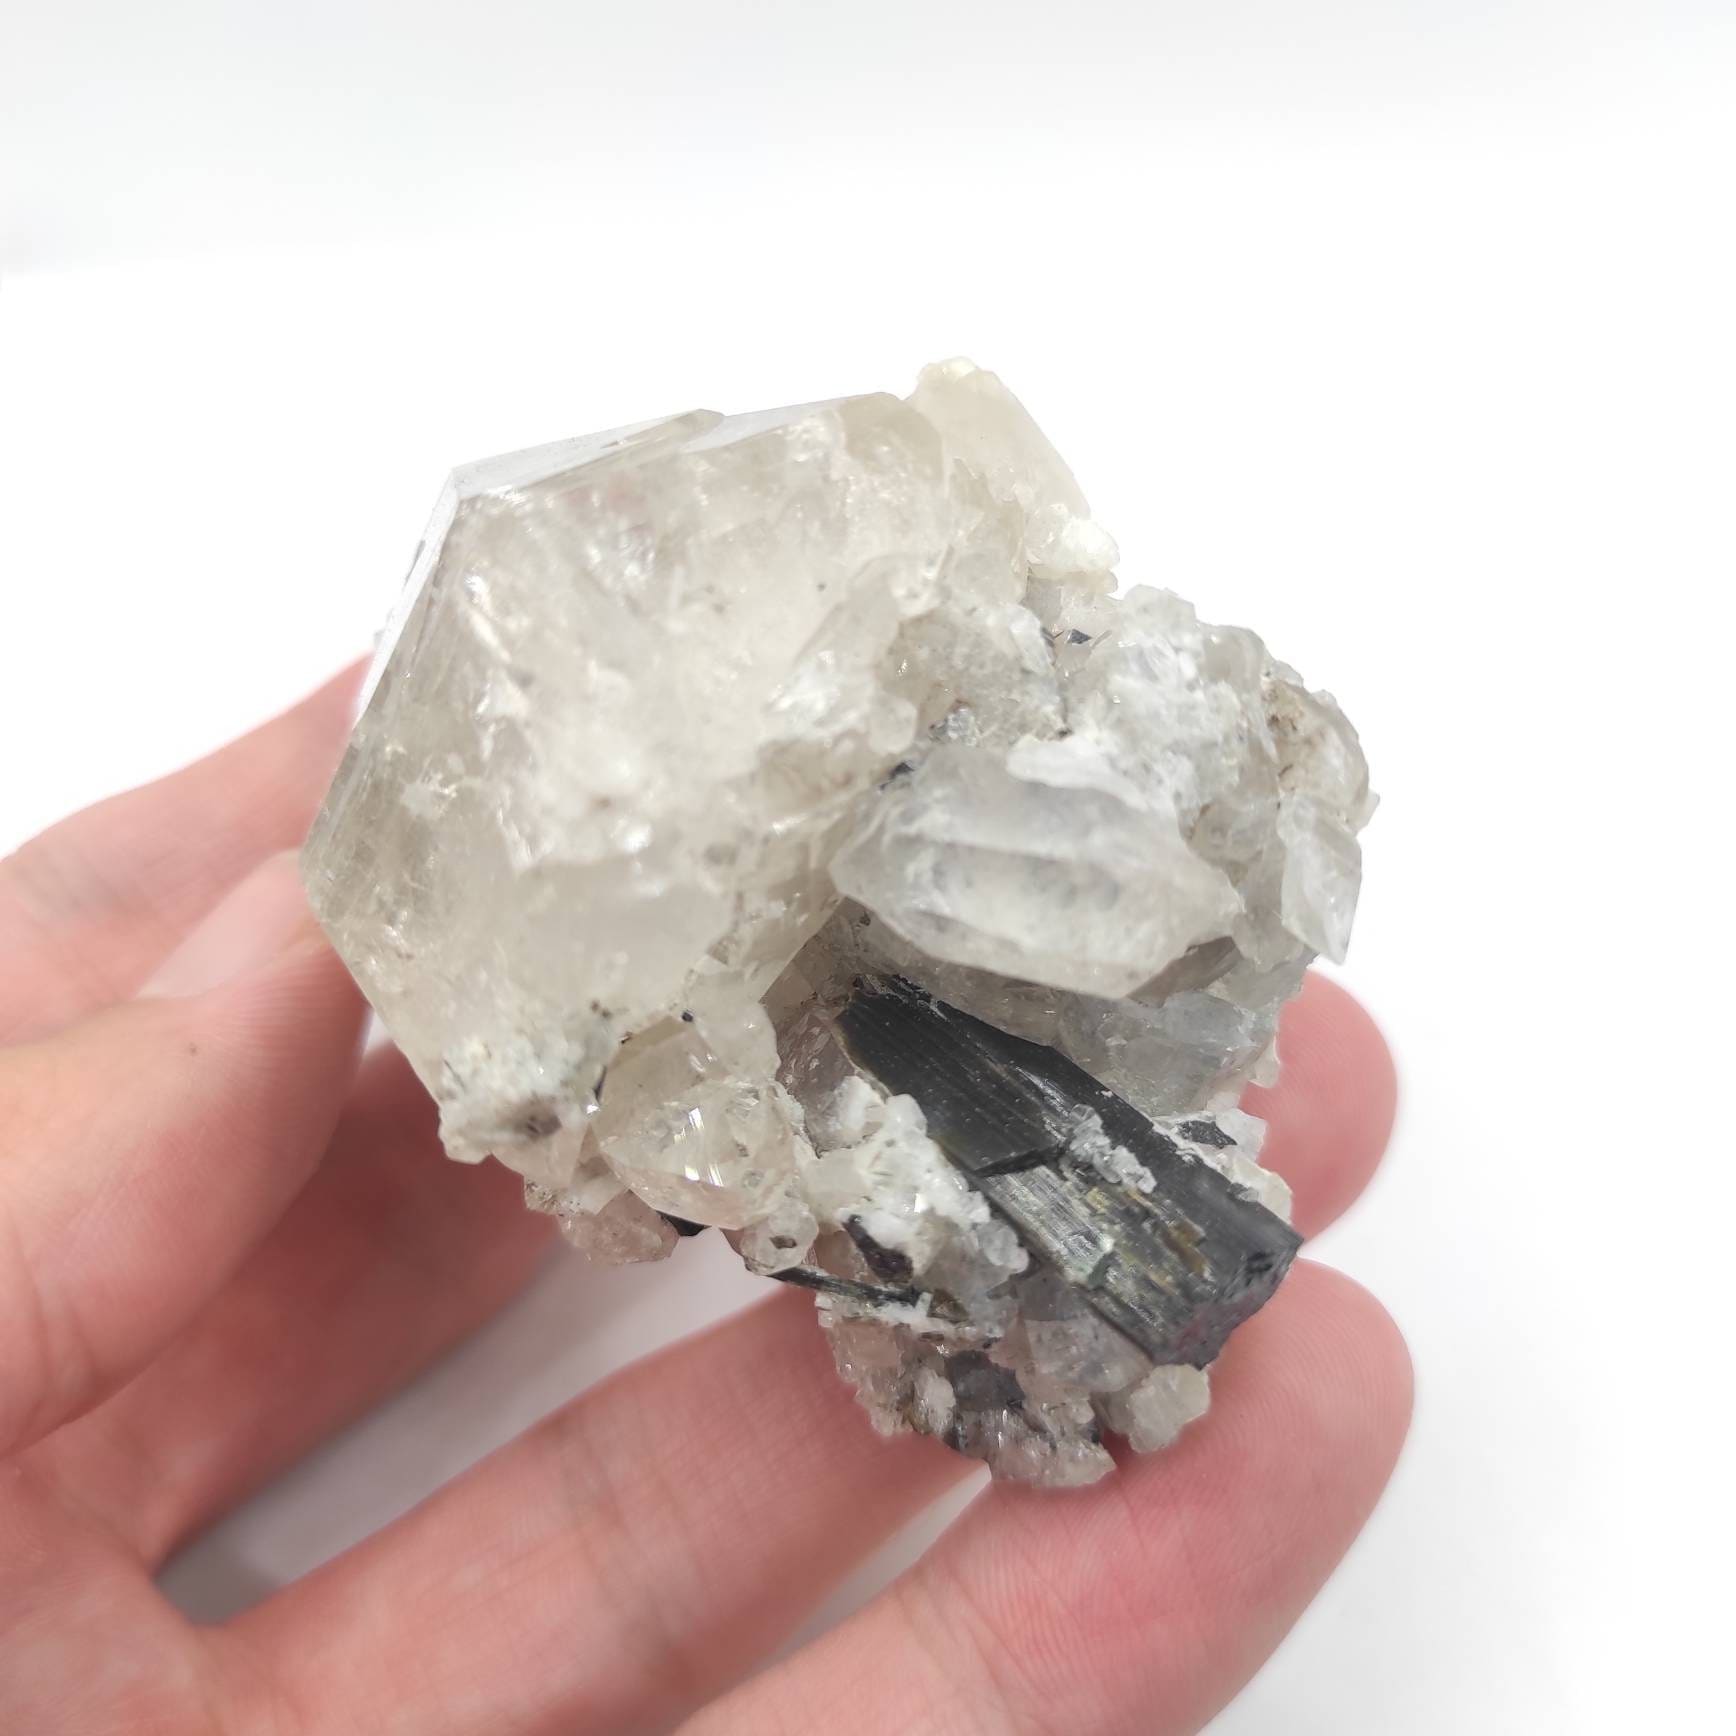 113g Black Tourmaline in Smoky Quartz - Natural Quartz Specimen - Tourmaline in Quartz Cluster - Raw Quartz Minerals - Pakistan Tourmaline